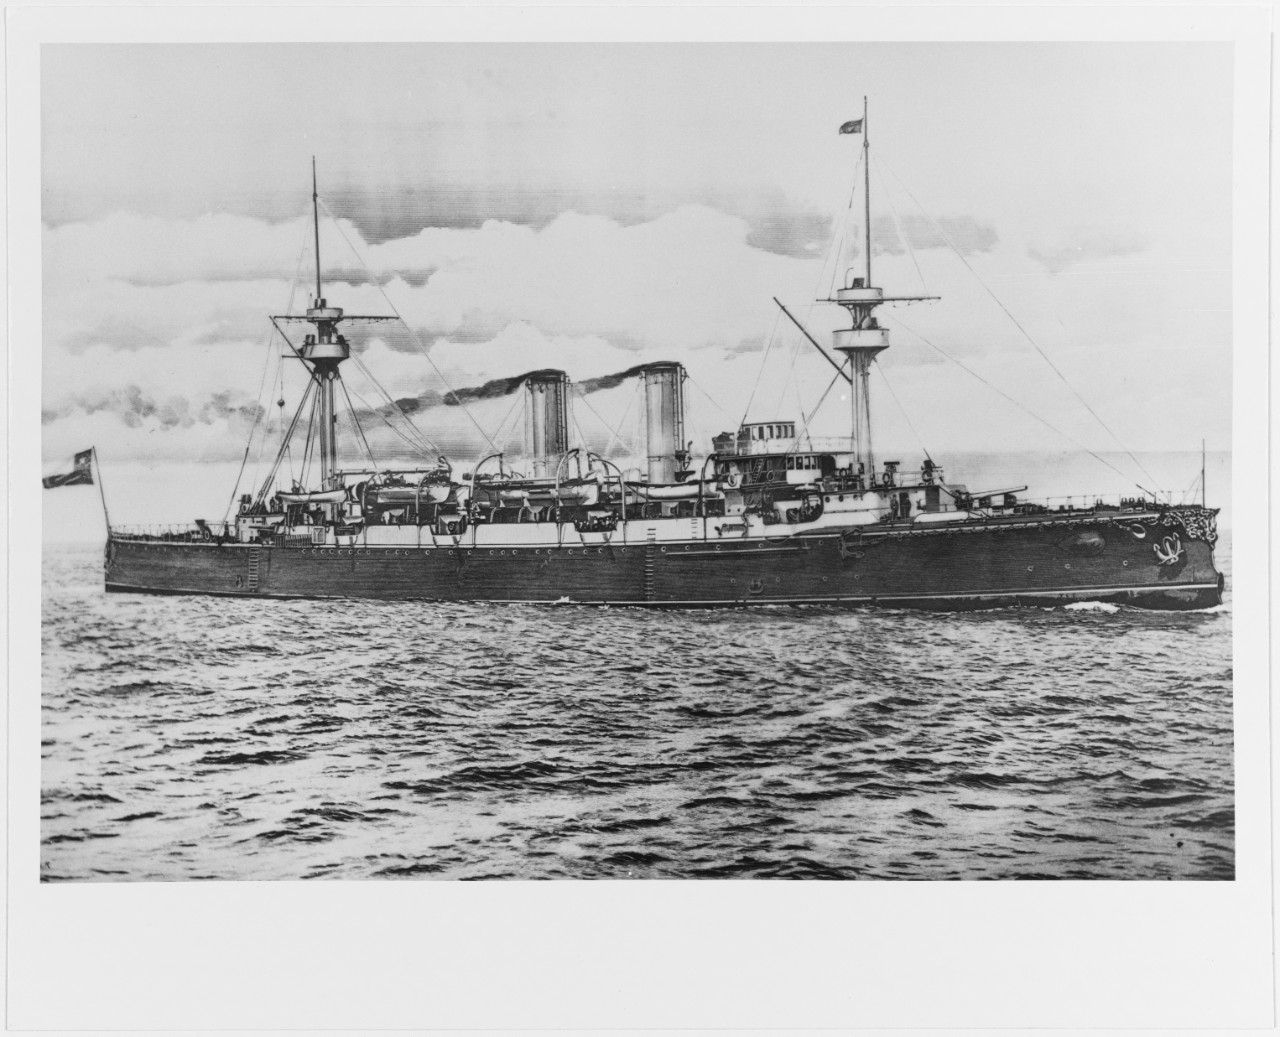 BLANCO ENCALDA (Chilean cruiser, 1893)